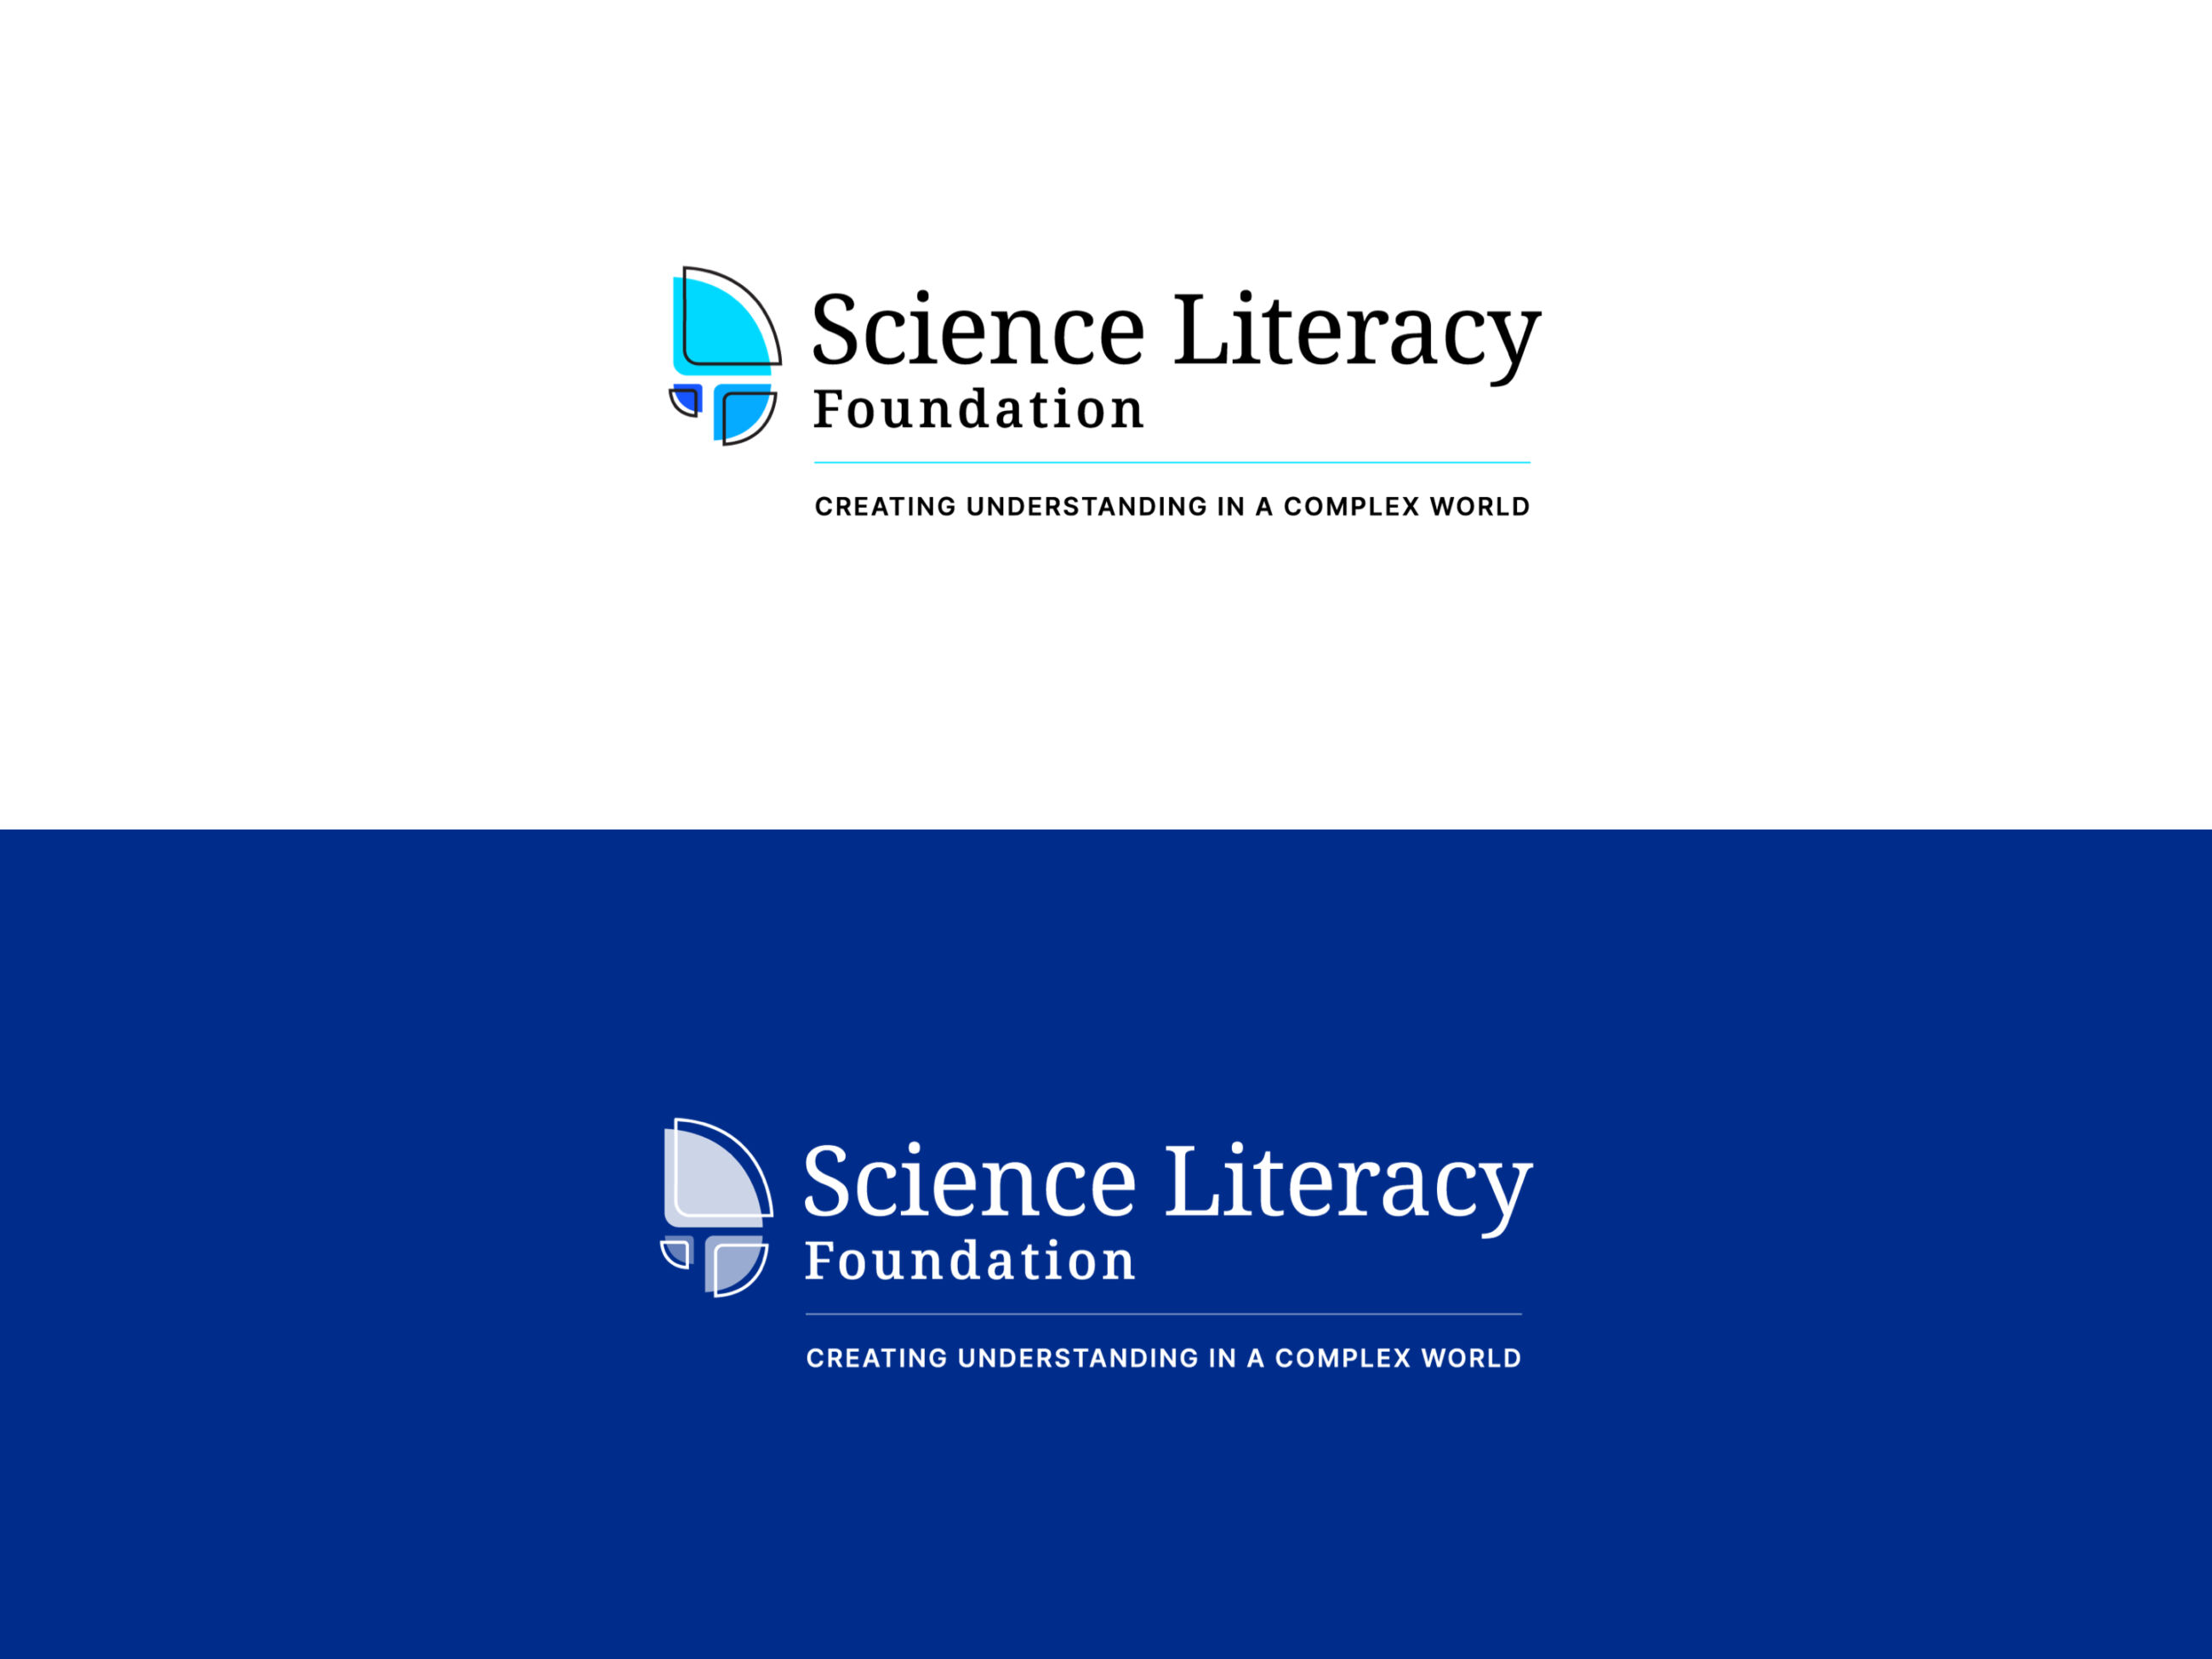 Science literacy foundation logo variations